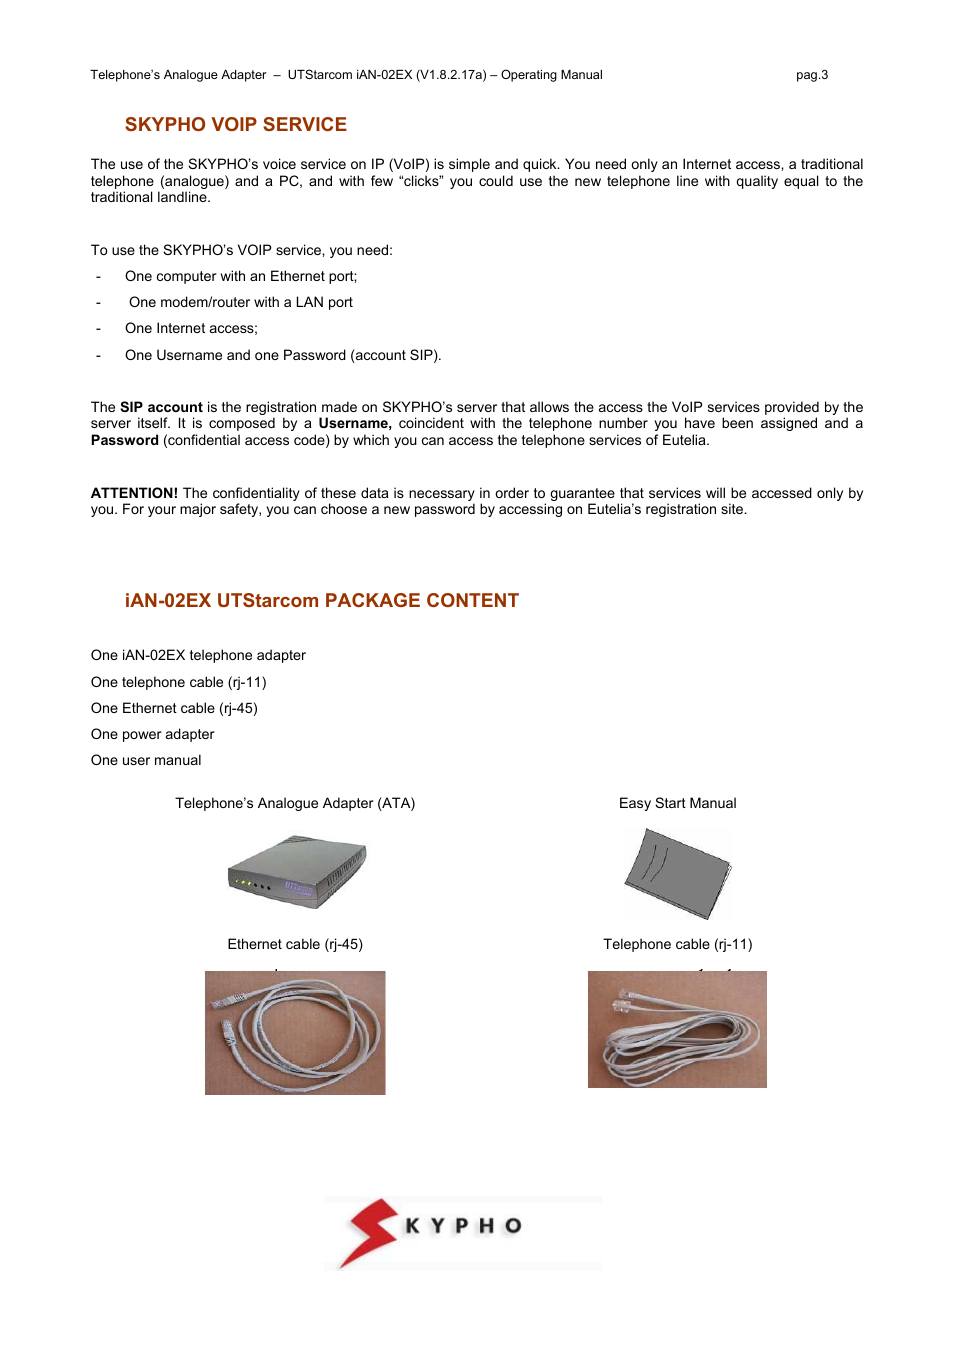 Skypho voip service, Ian-02ex utstarcom package content | UTStarcom IAN-02EX User Manual | Page 3 / 12